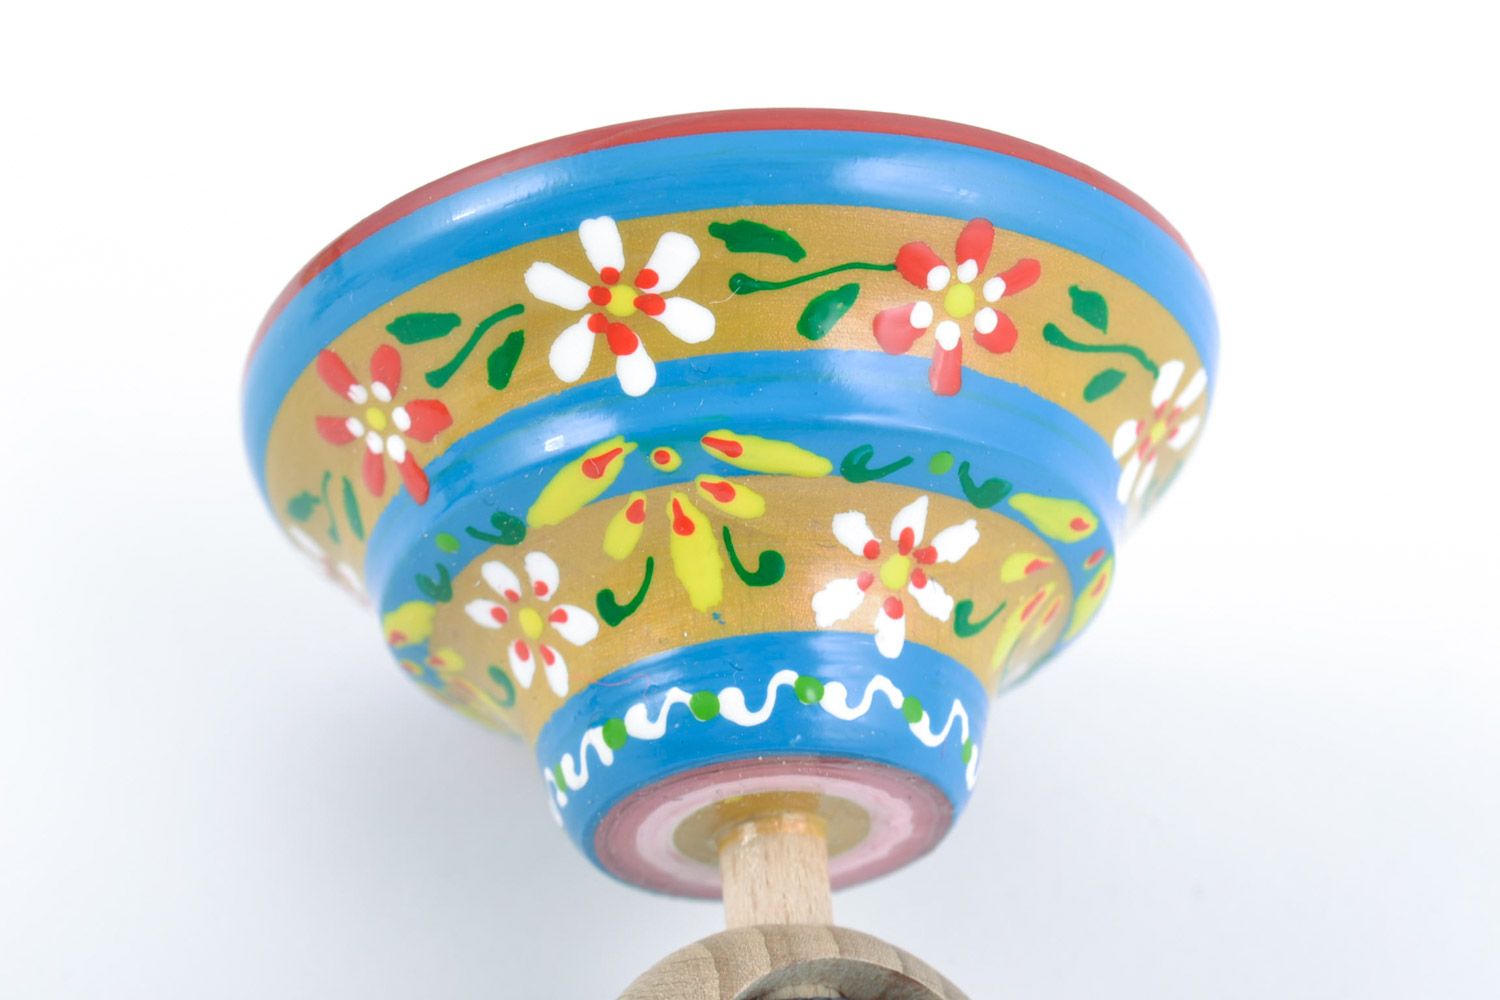 Trompo de madera artesanal juguete para niños pintado con tintes ecológicos  foto 5